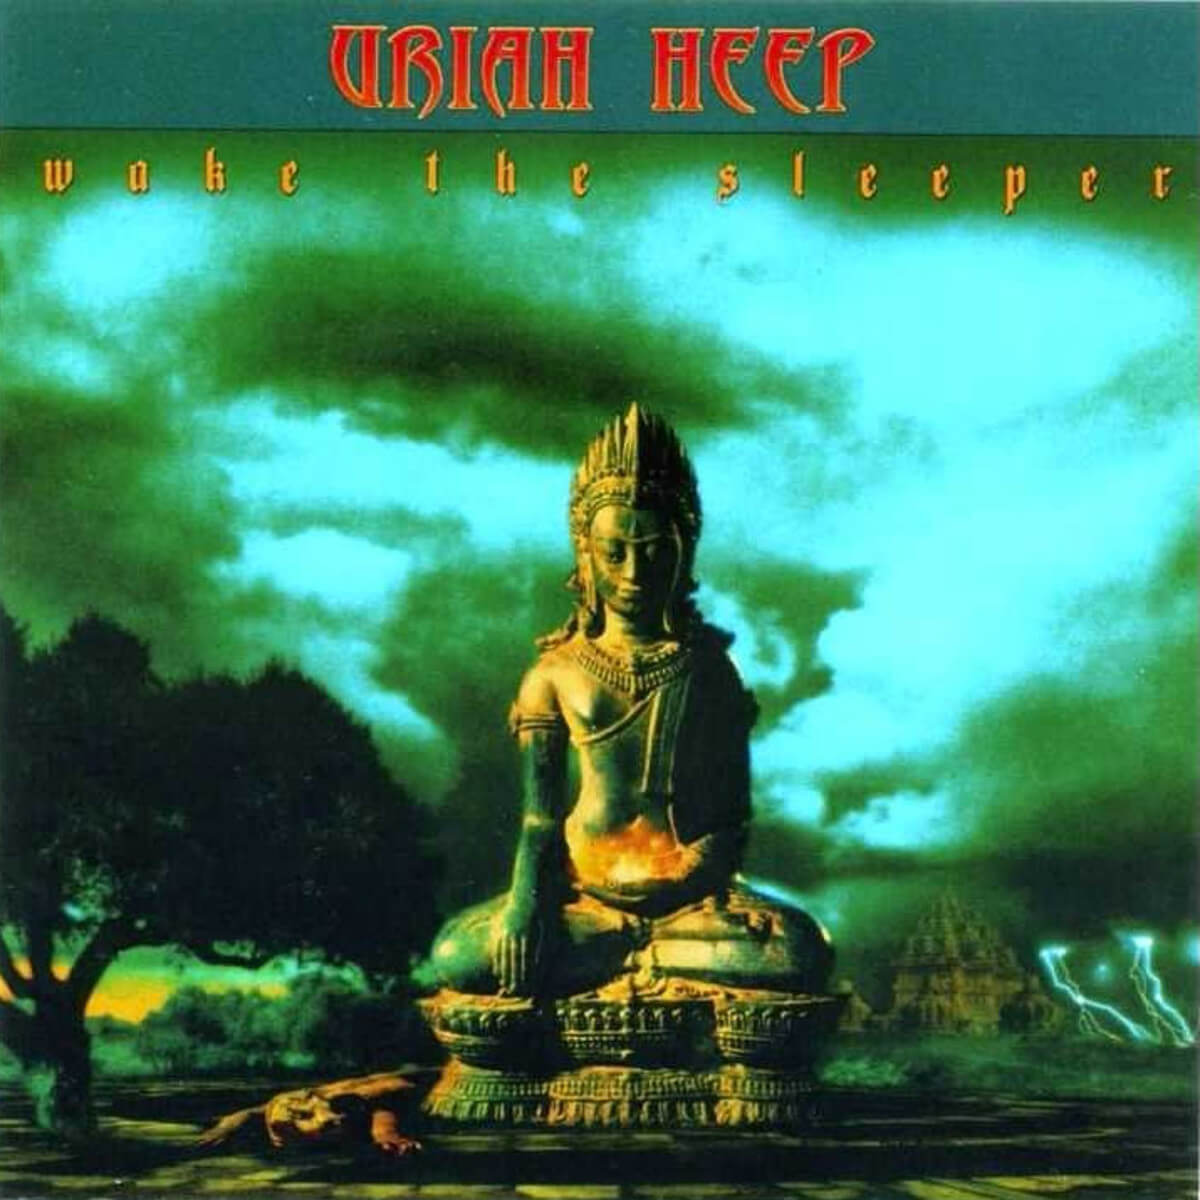 Uriah Heep - Wake the Sleeper - Cover Vinil